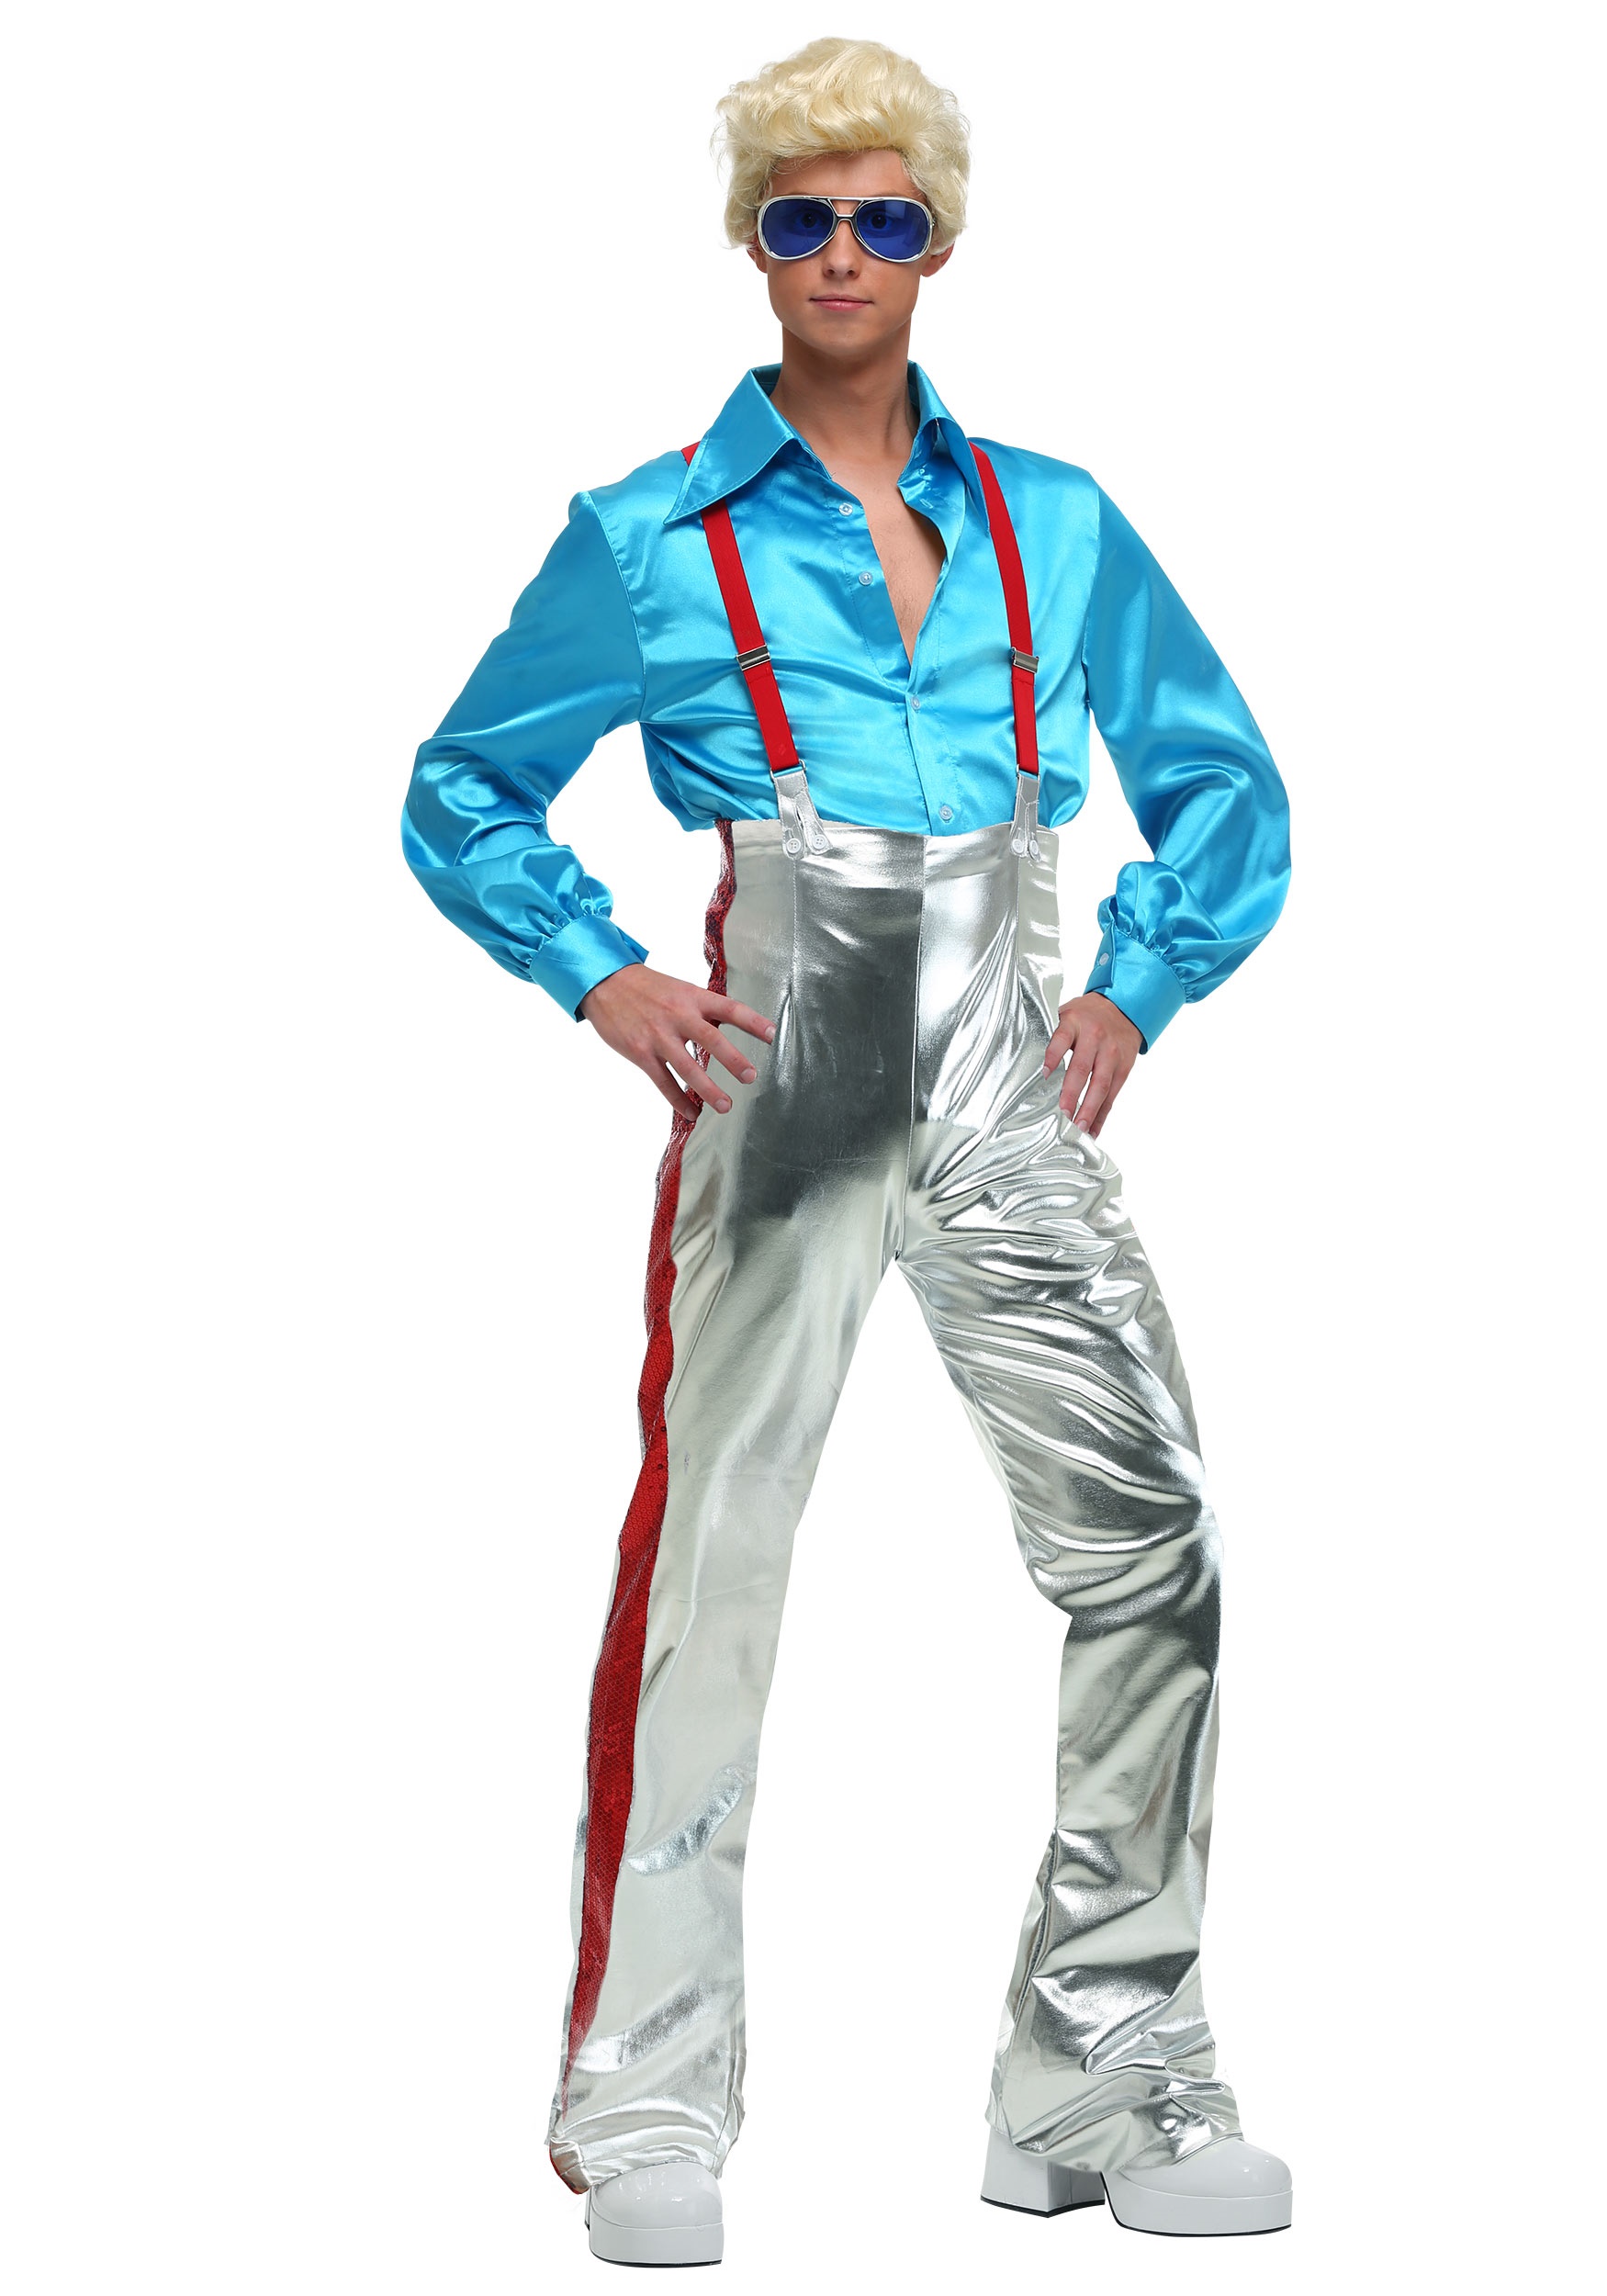 Photos - Fancy Dress FUN Costumes Funky Disco Plus Size Men's Costume Blue/Gray/Red FUN